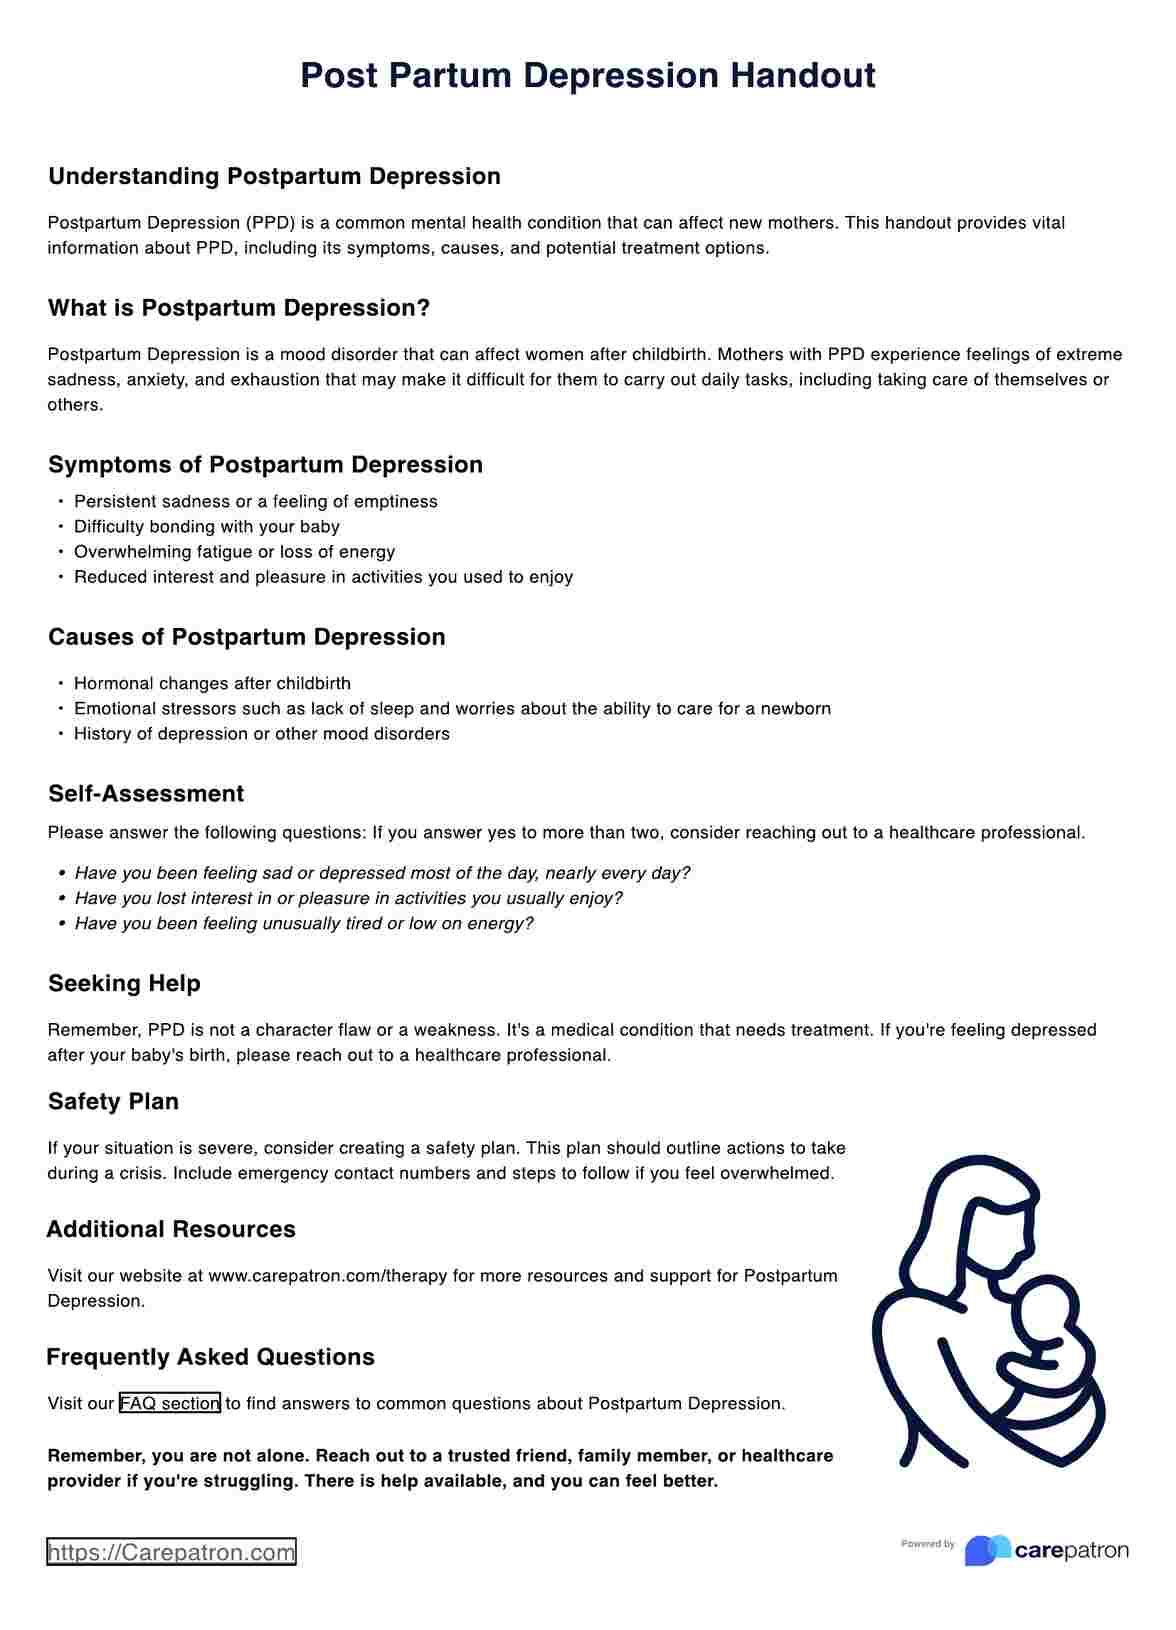 Postpartum Depression Handouts PDF Example